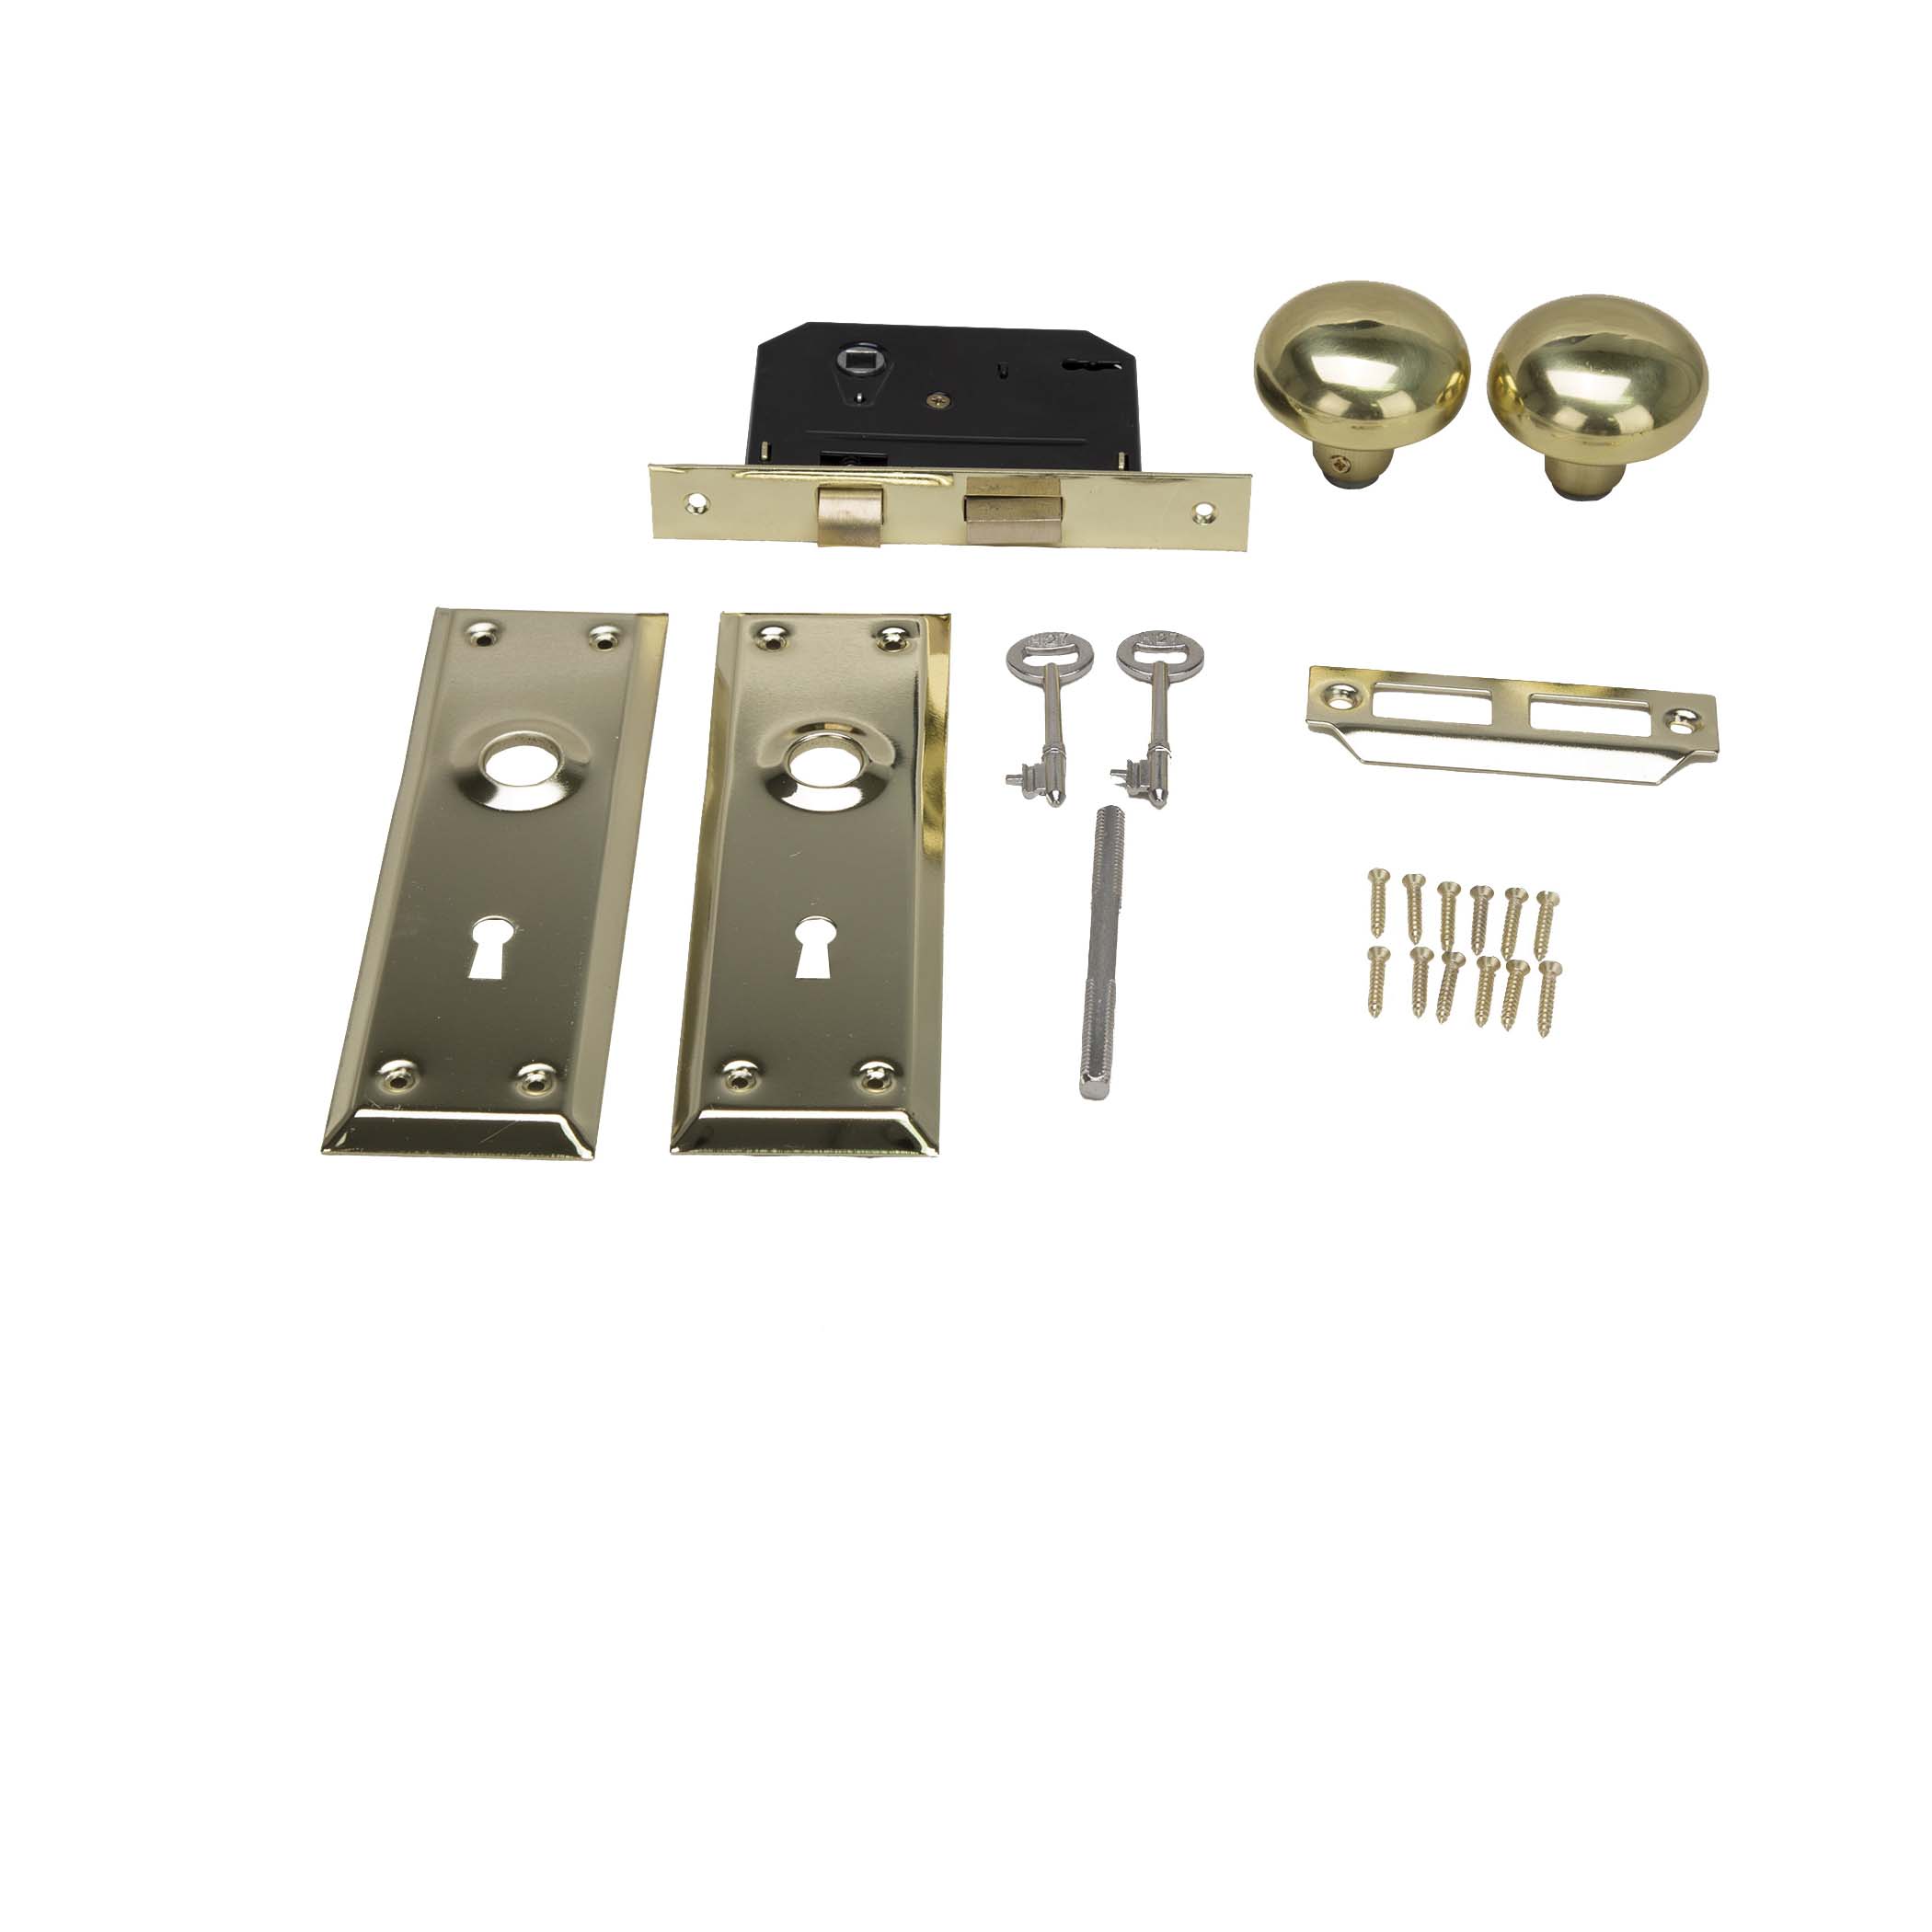 6870372-3L Mortise Interior Lockset, Polished Brass, Steel, KW1 Keyway, Brass